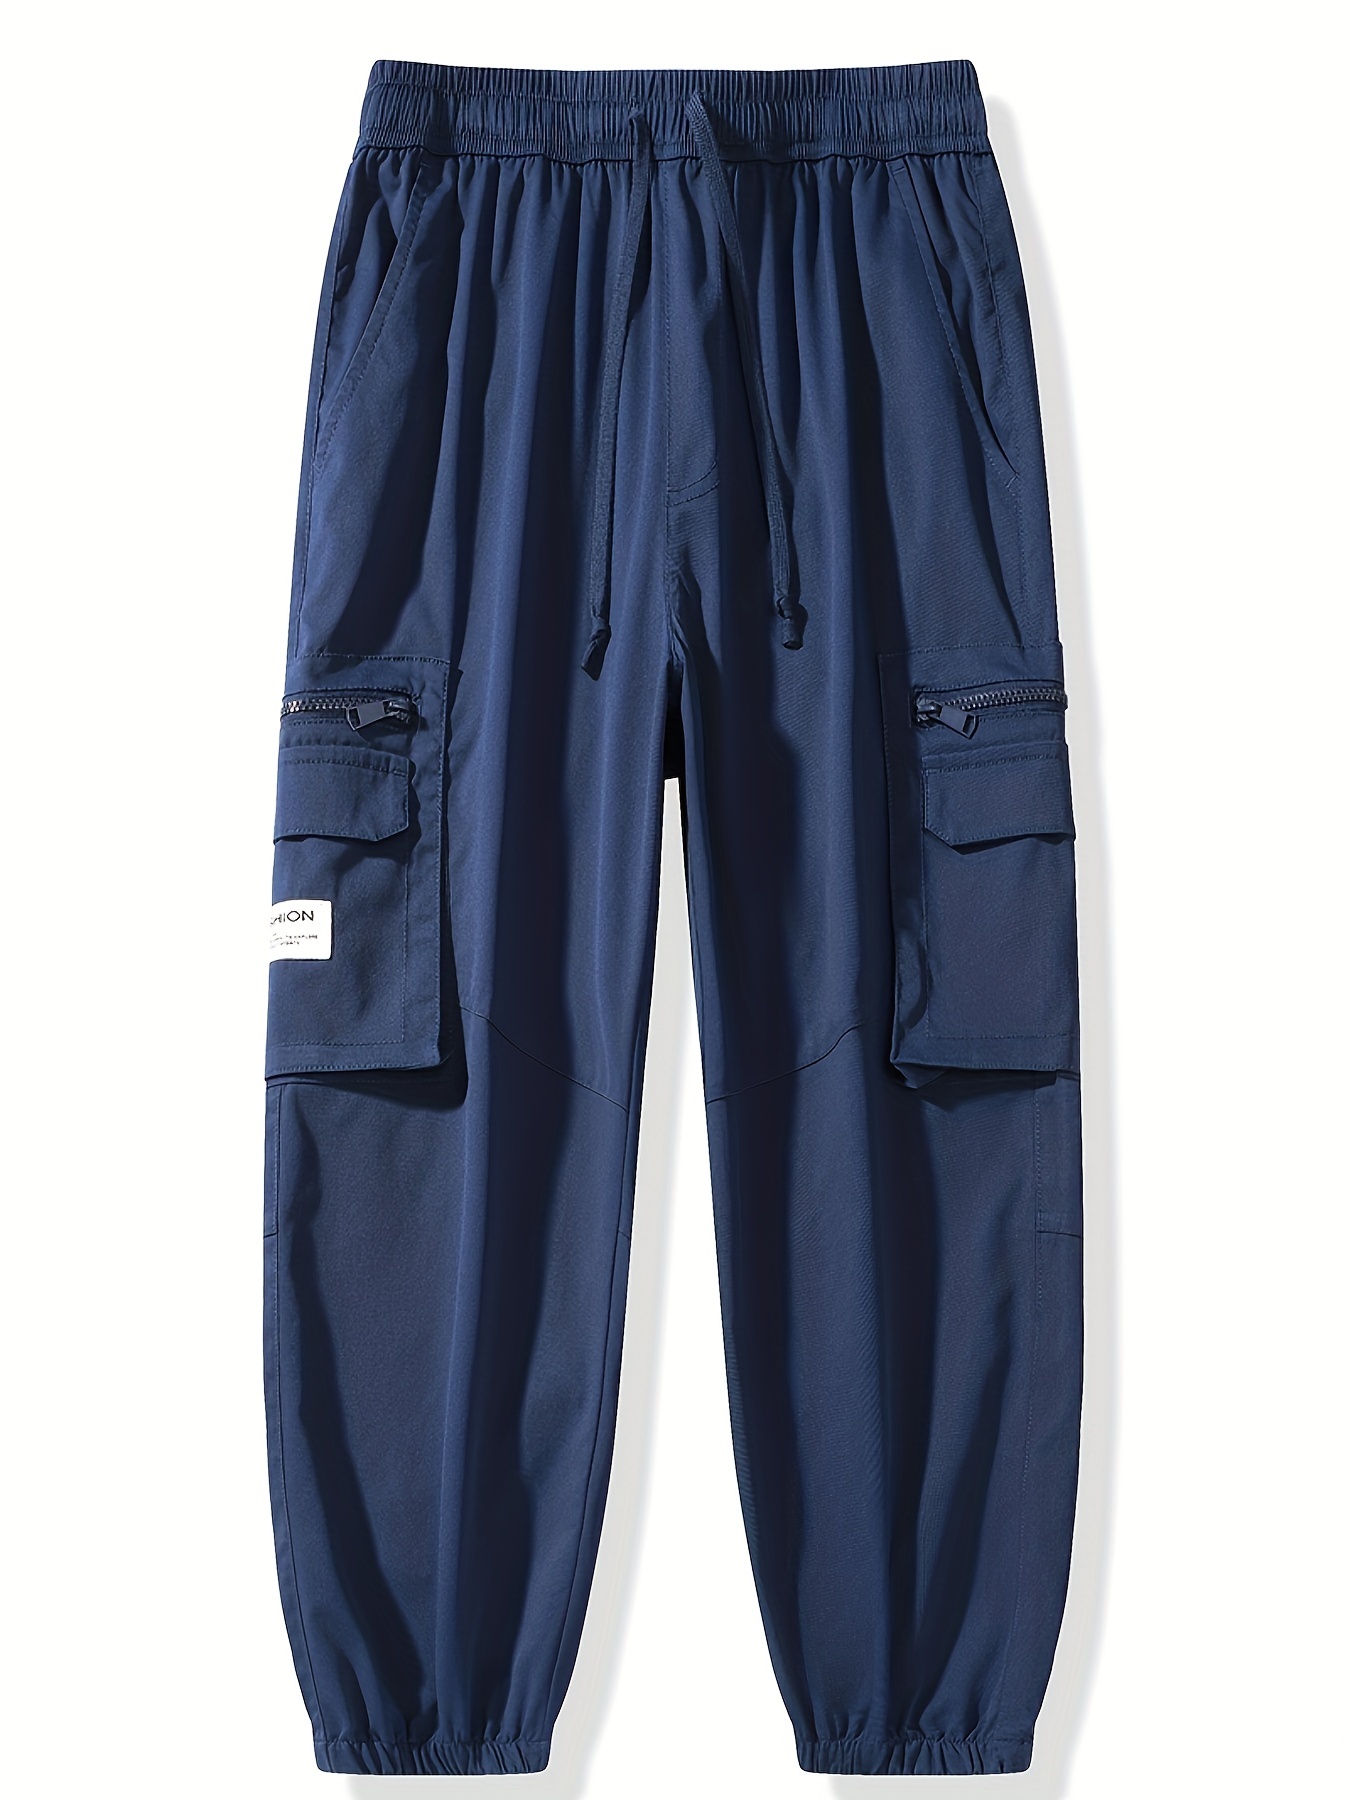 Men's Printed Cargo Pants, Multi Pocket Stretch Waist Drawstring